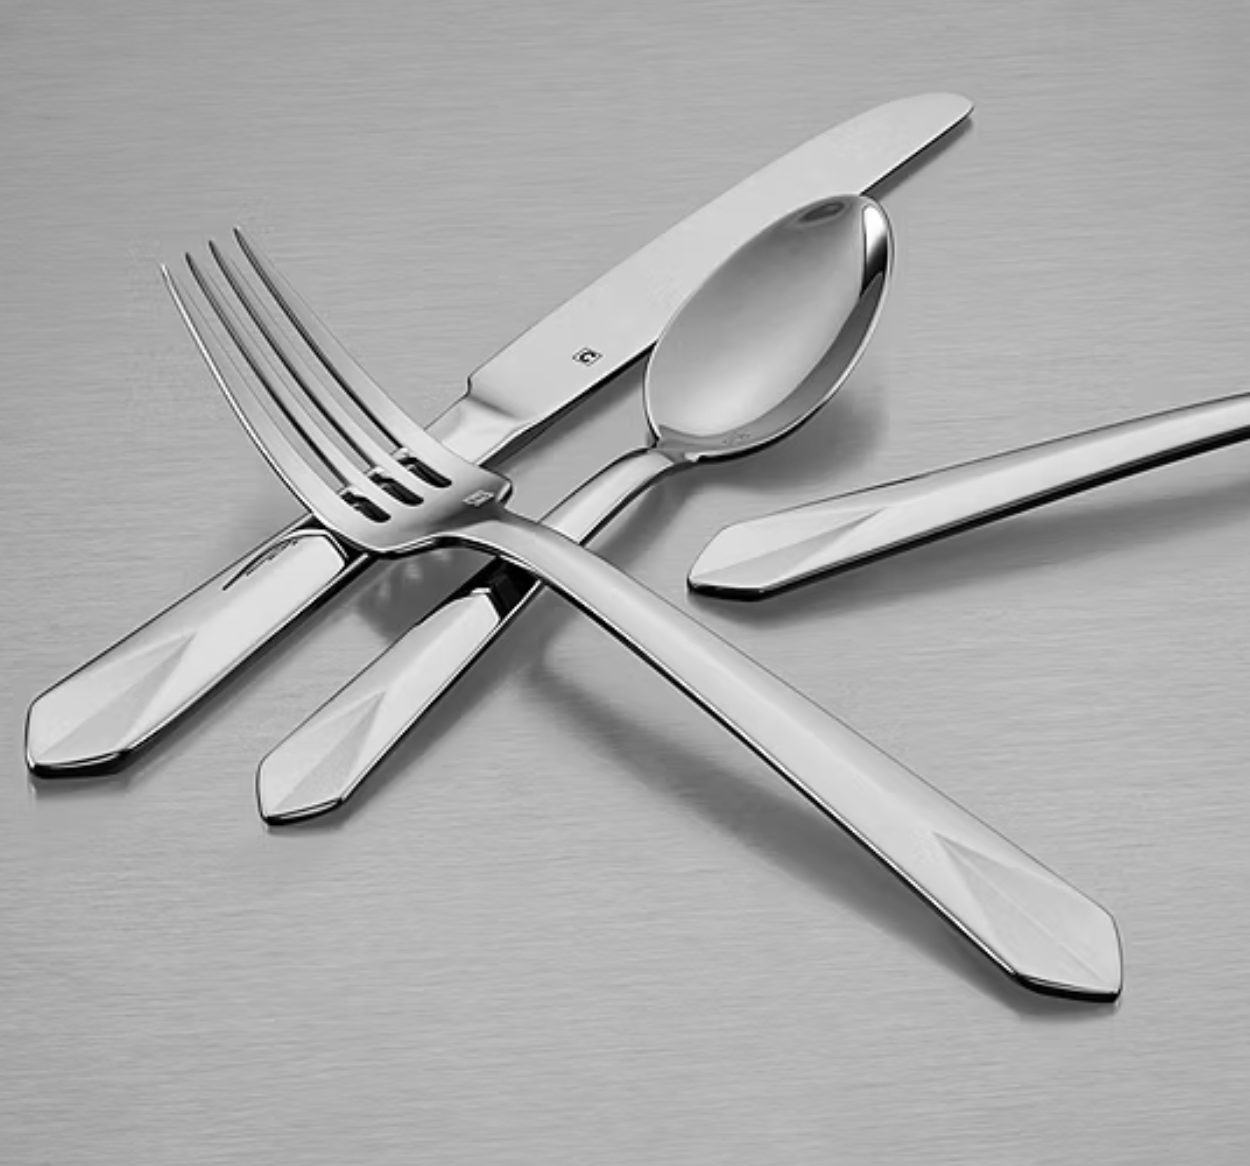 Cuisinart Jolie 20-Piece Fine Stainless Steel Flatware Set – Service for 4